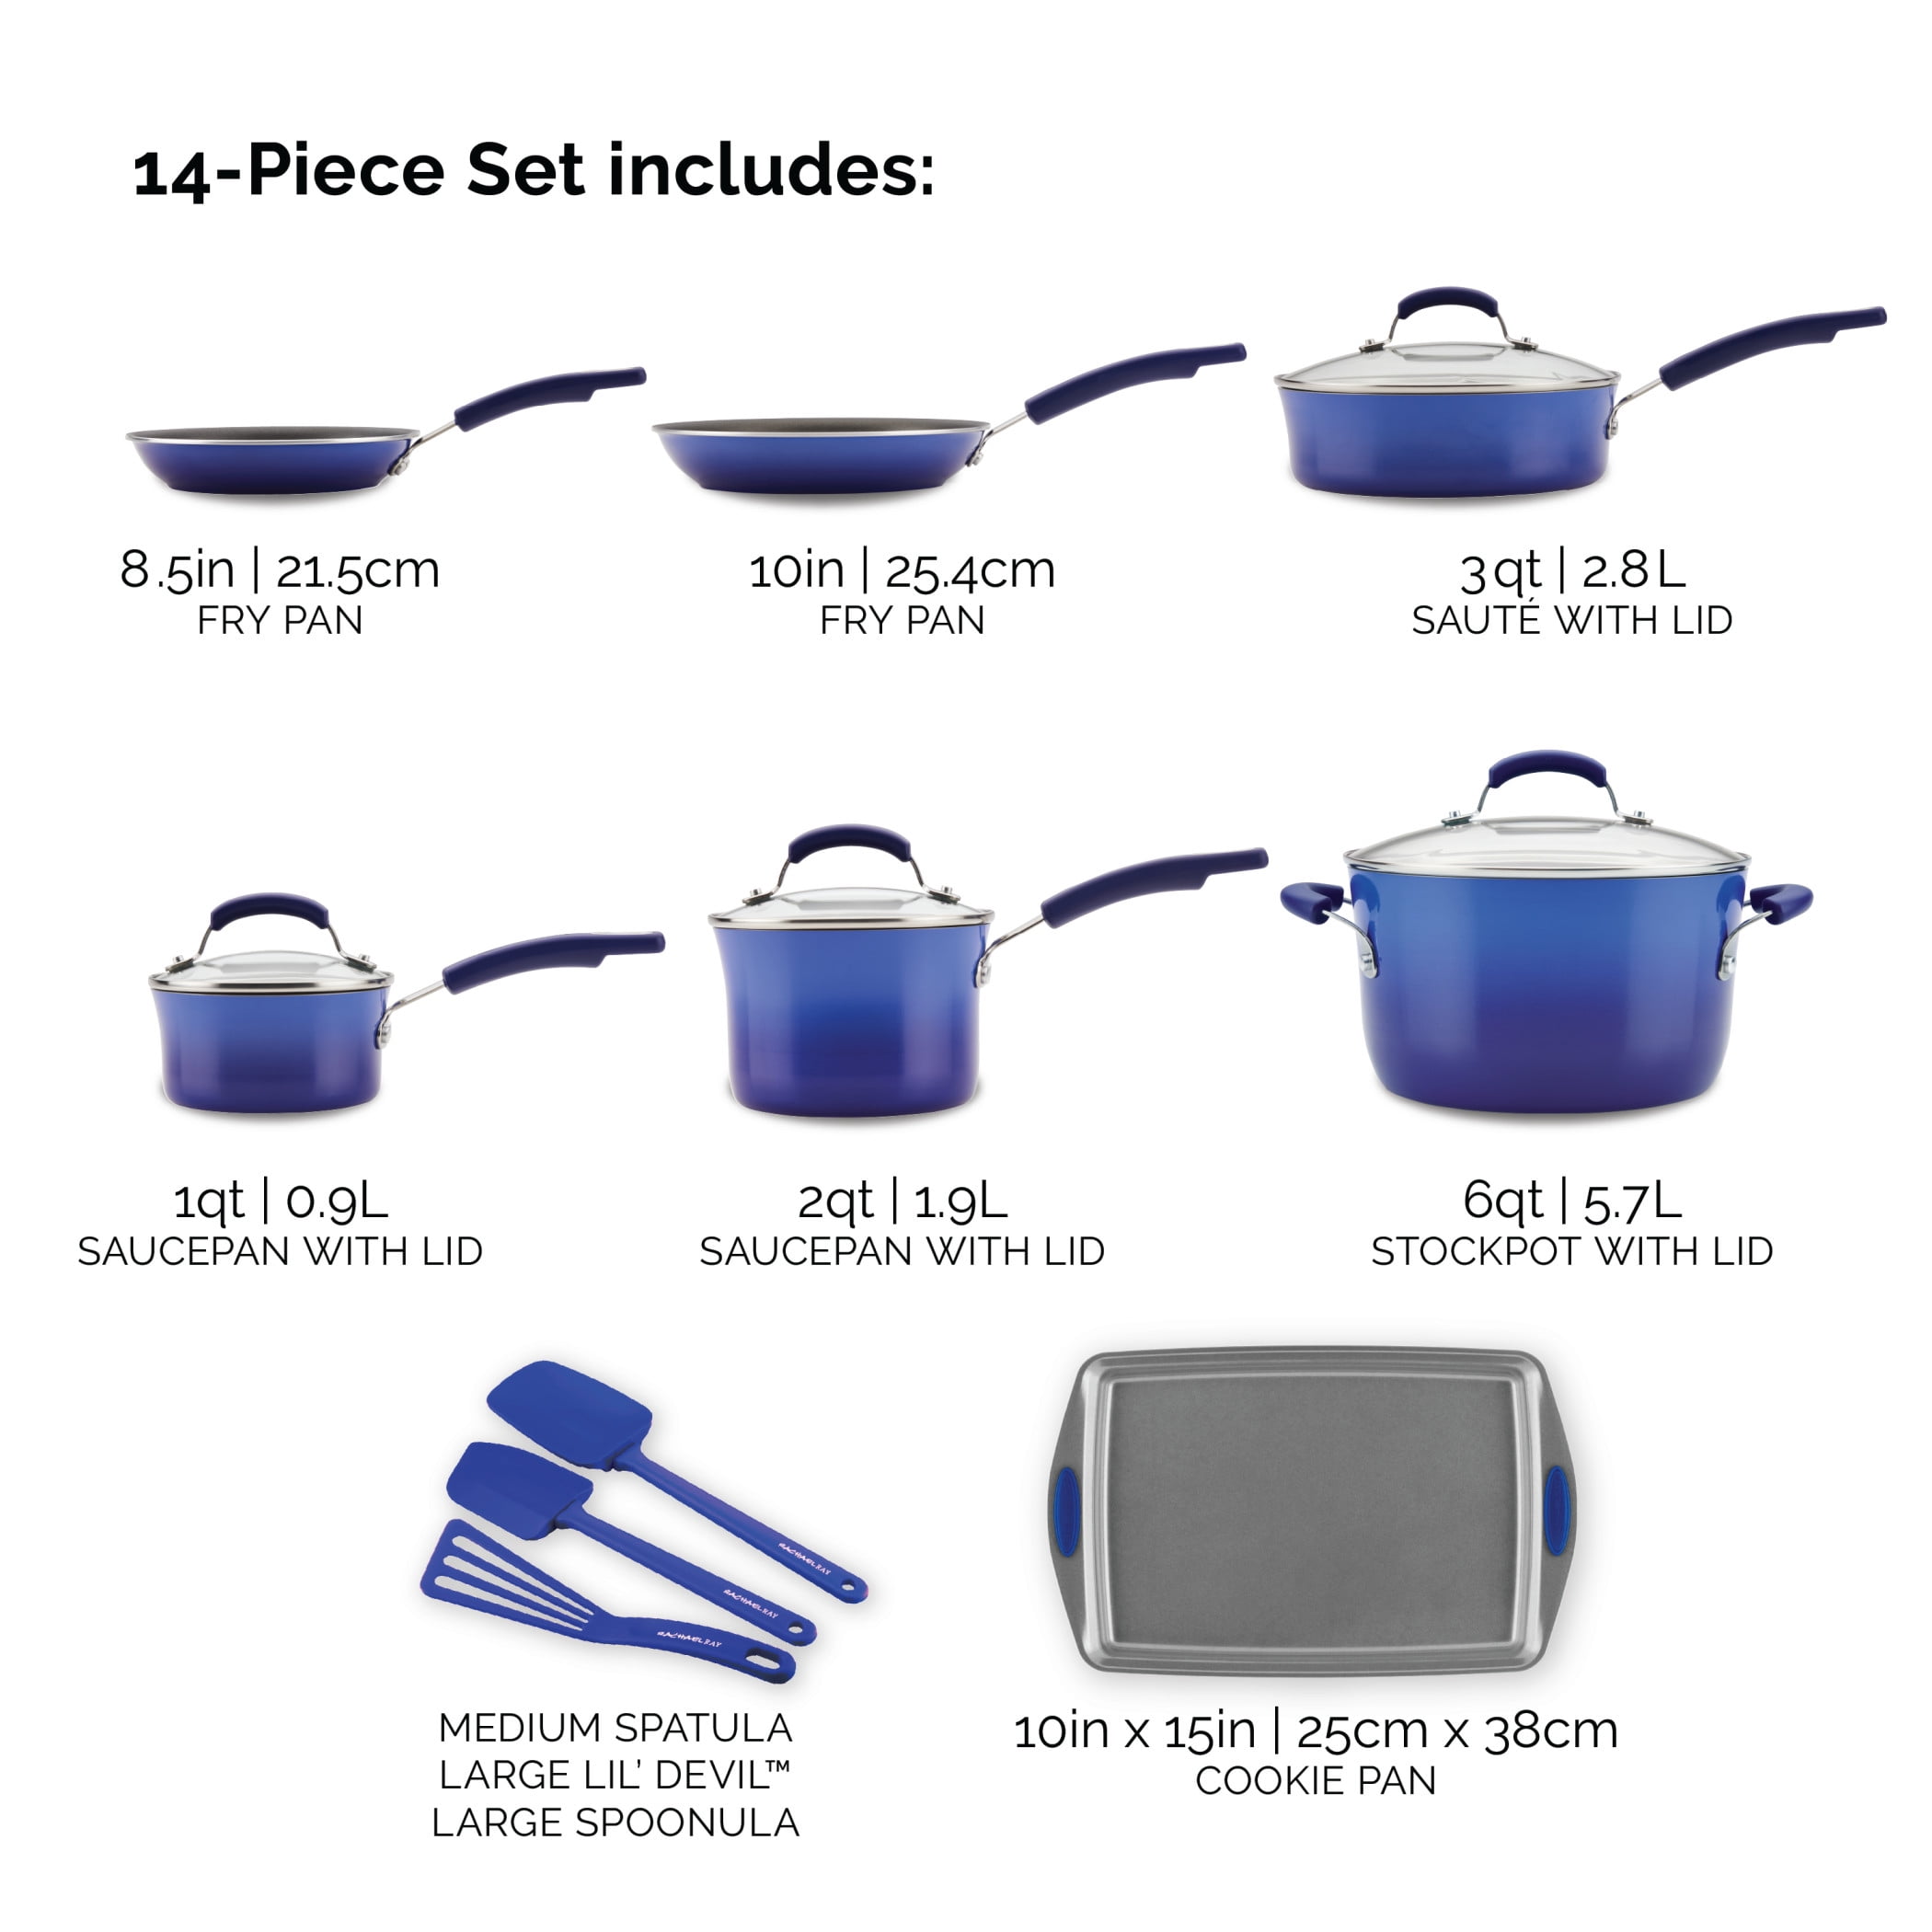 Real Living Non-Stick 14-Piece Rivet Handle Cookware Set